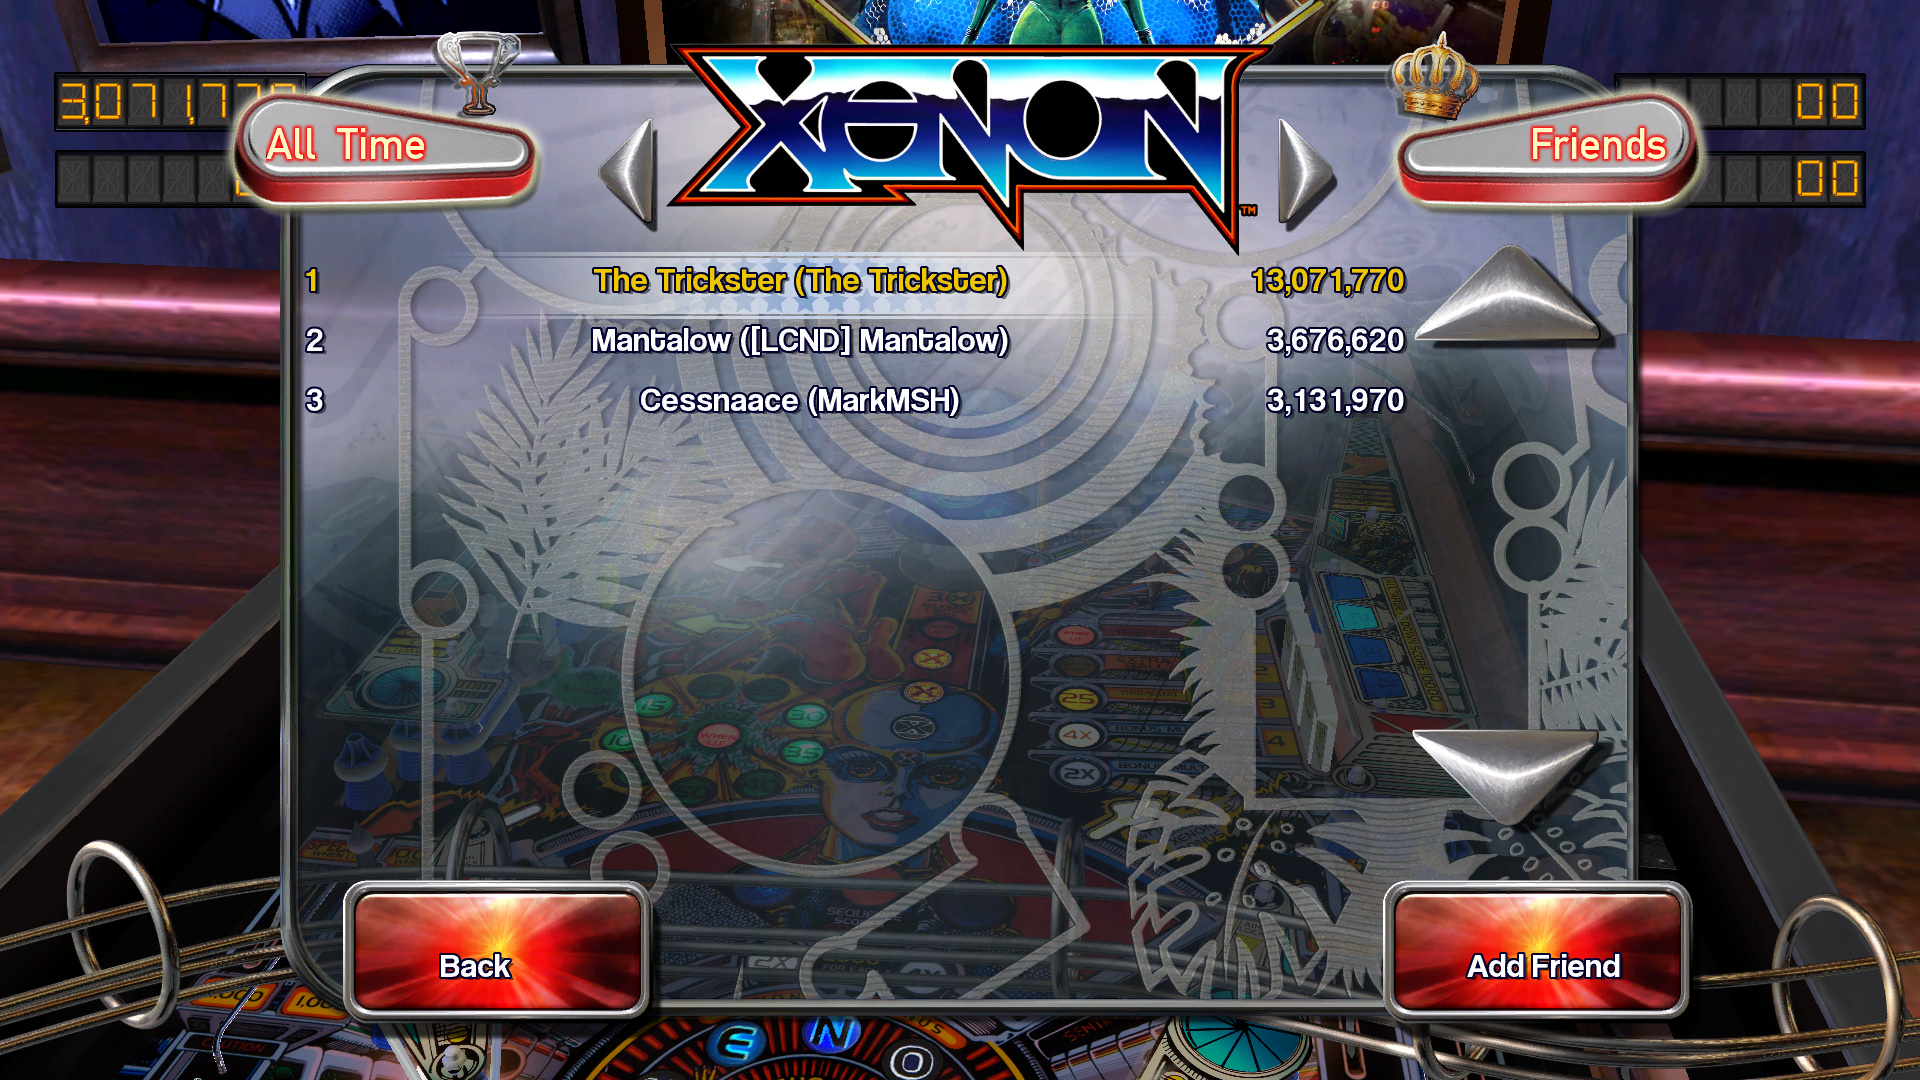 TheTrickster: Pinball Arcade: Xenon (PC) 13,071,770 points on 2015-09-23 05:32:00